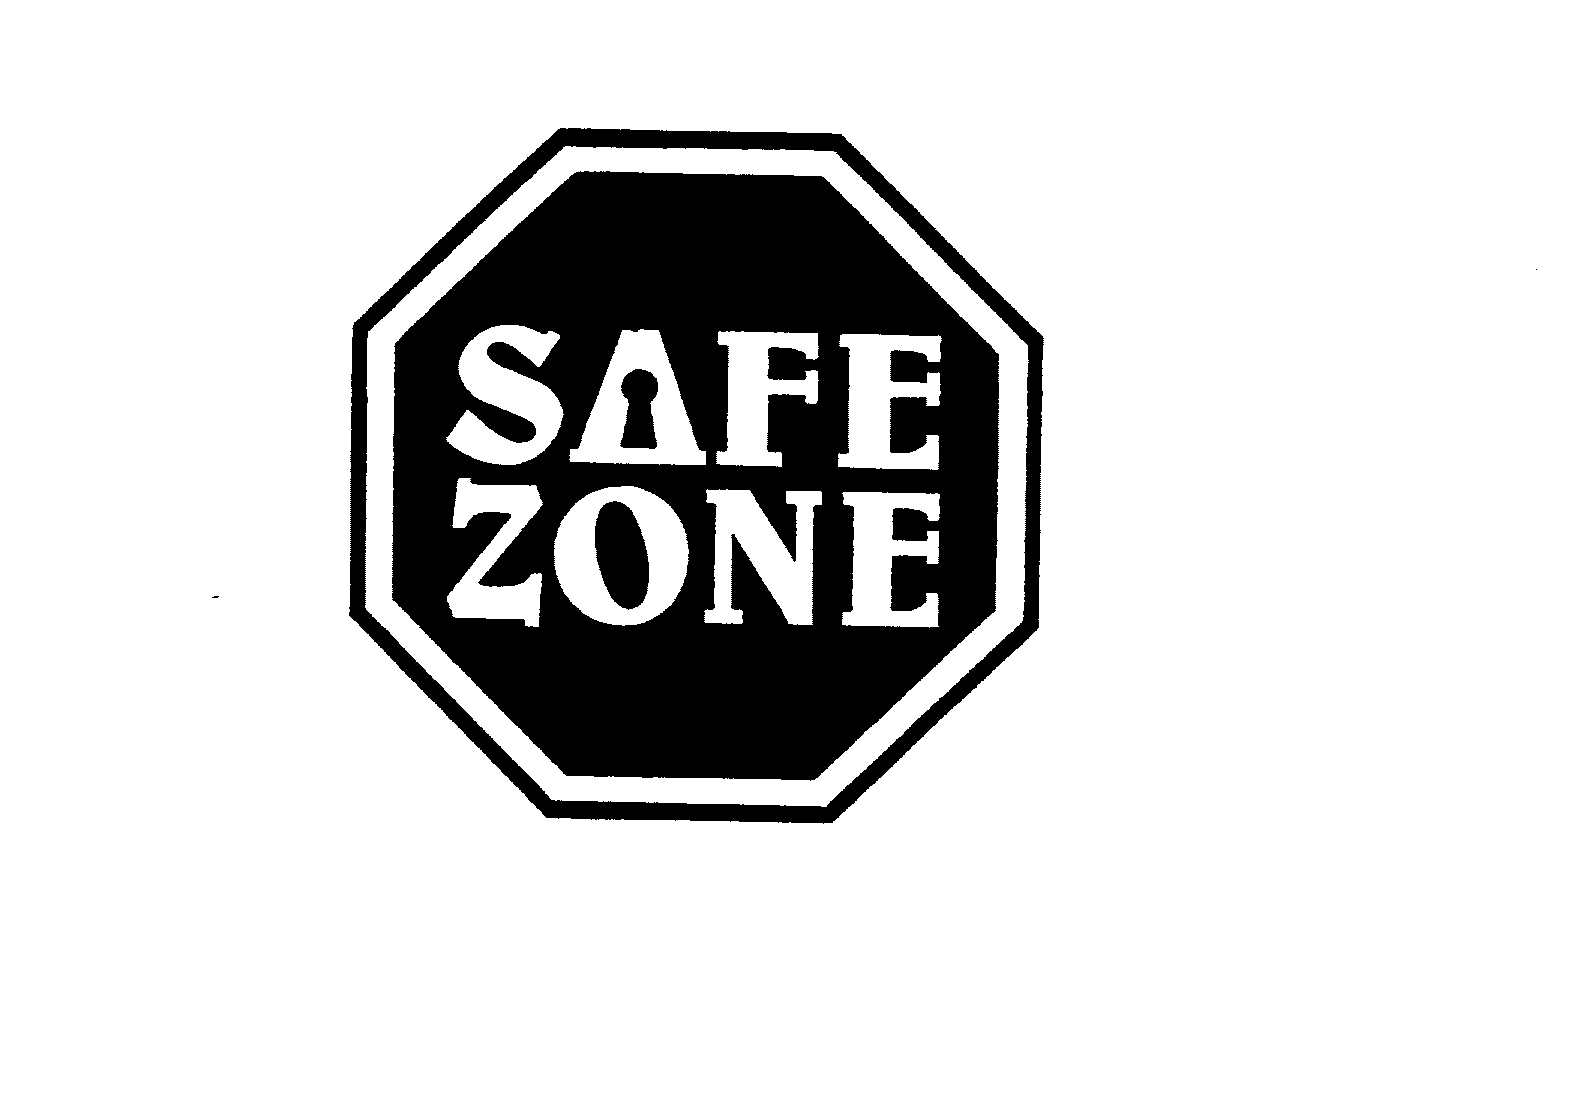 SAFE ZONE